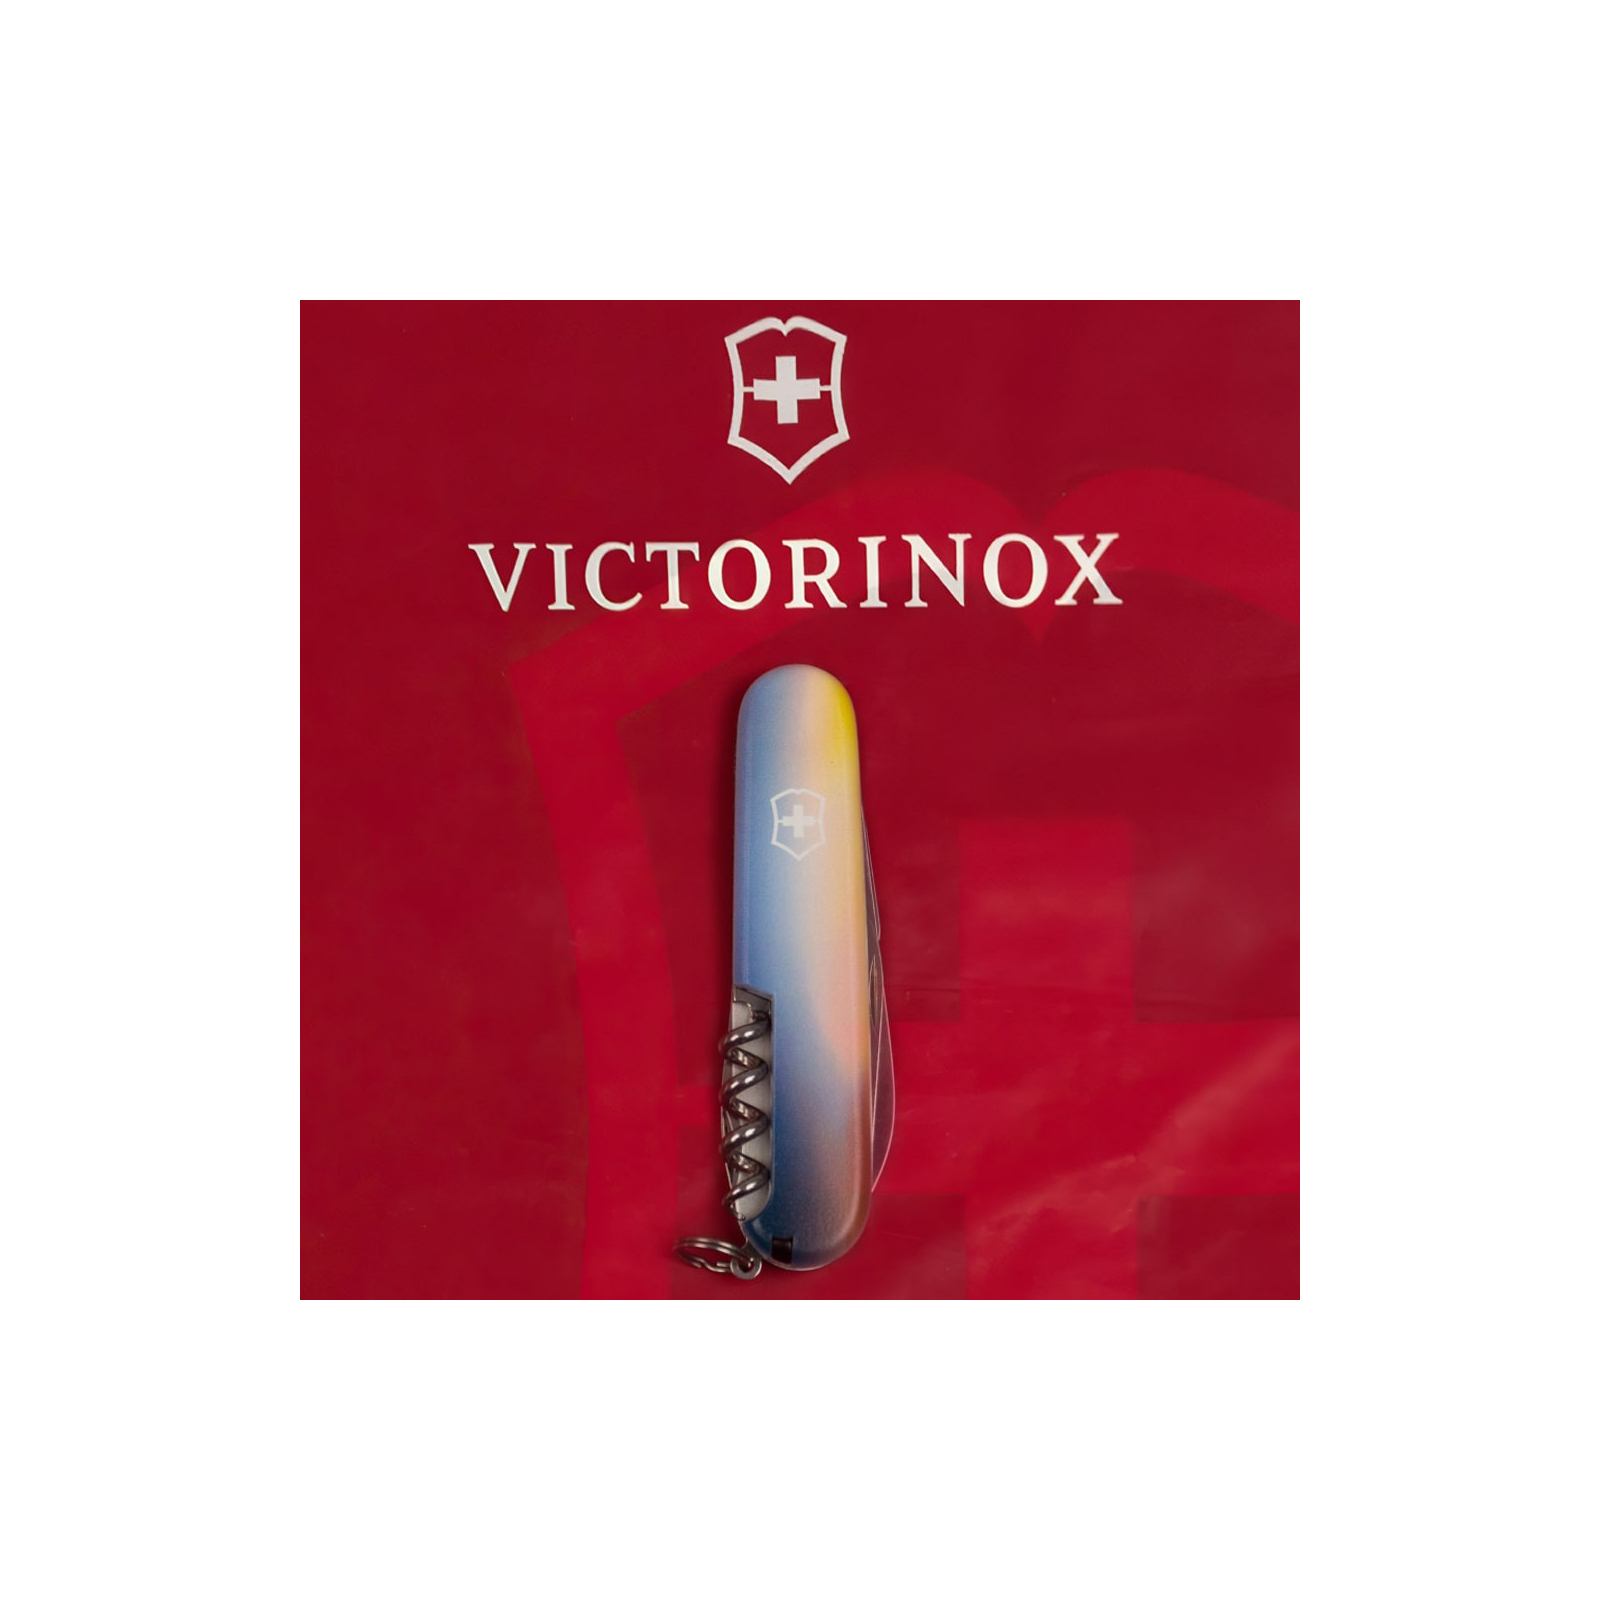 Нож Victorinox Spartan Army 91 мм Літак + Емблема ПС ЗСУ (1.3603.3_W3040p) изображение 10